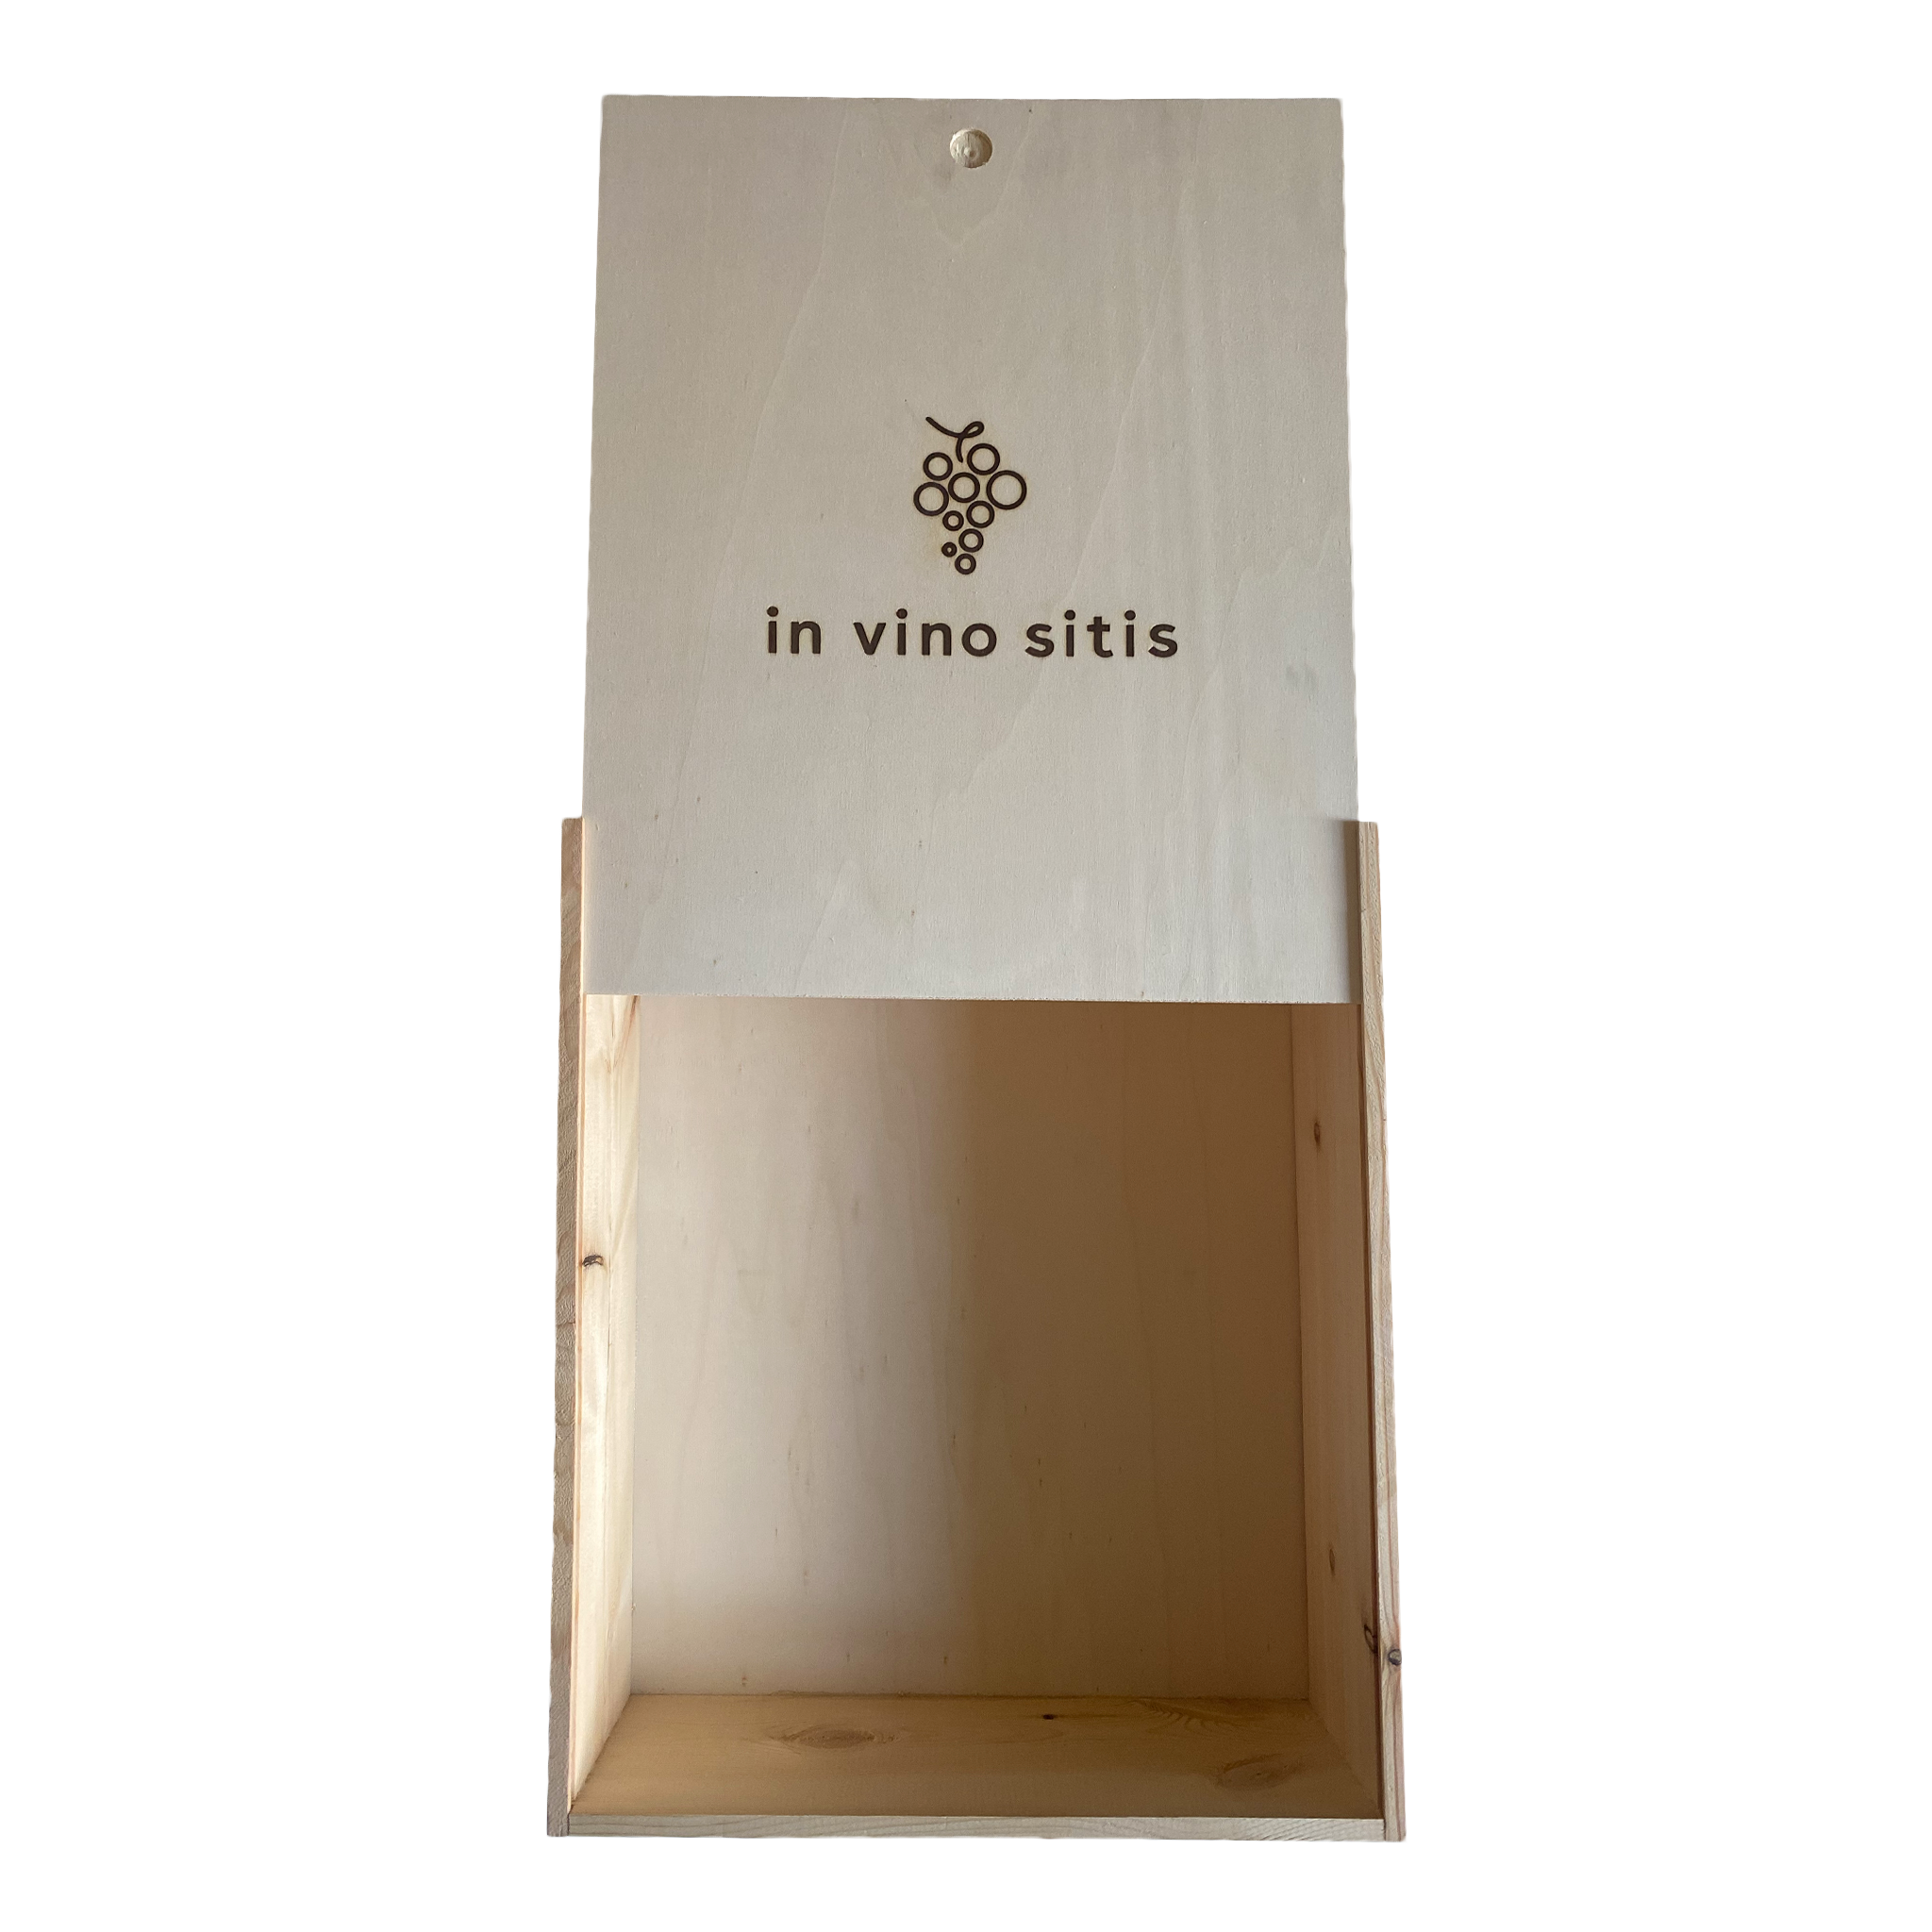 Scatola in legno per vino (3 bottiglie - Large)